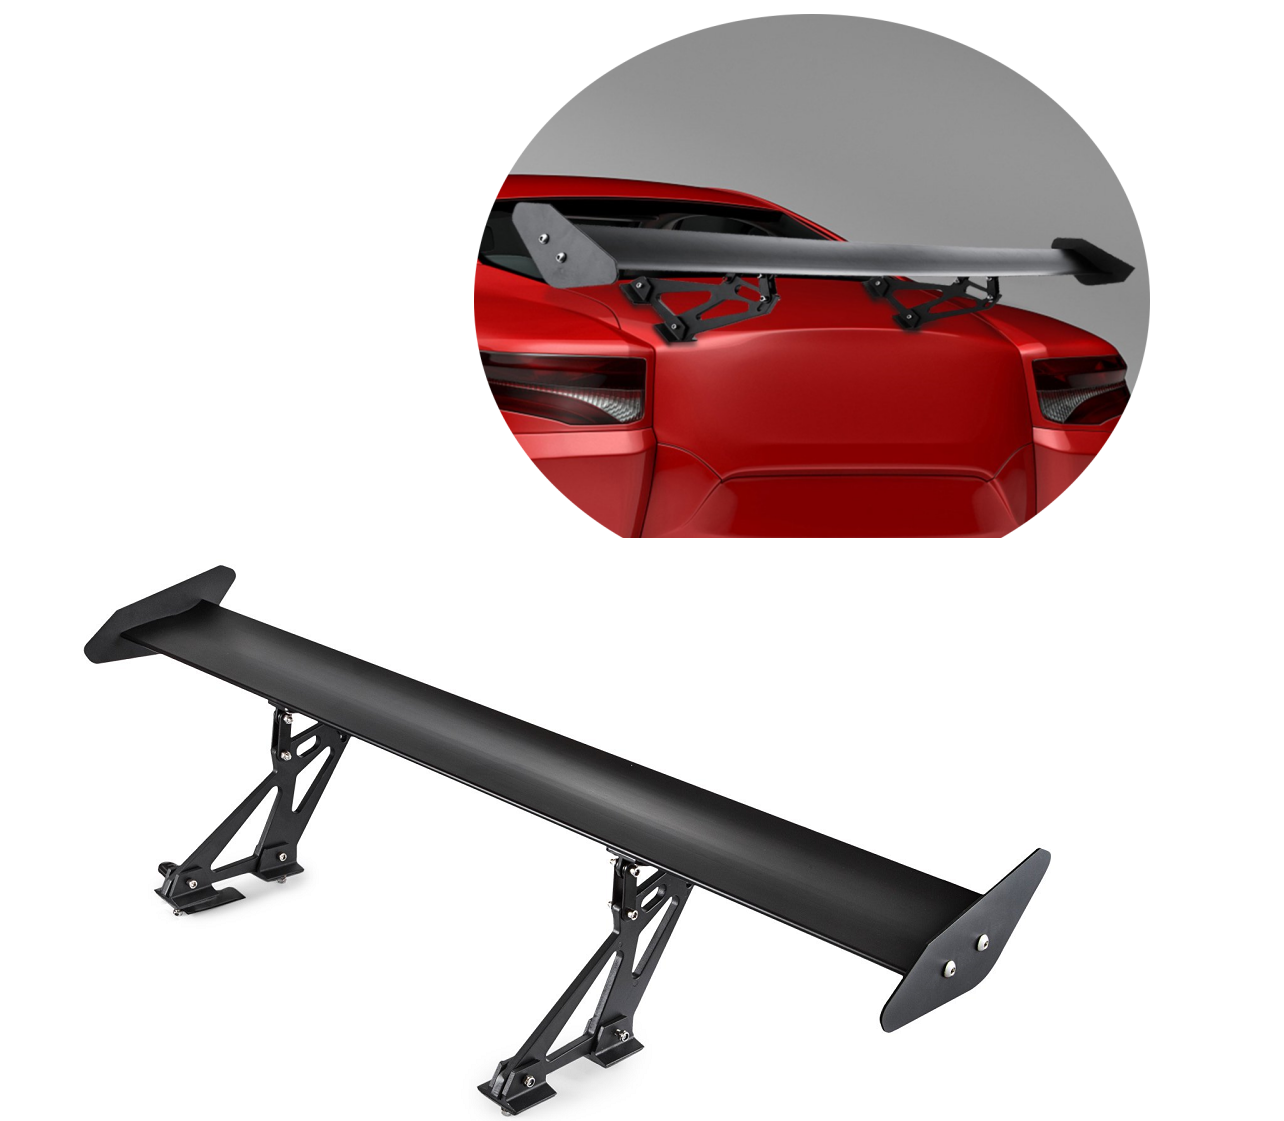 SHZOND GT Single Deck Spoiler Wing 43.3 inch Universal Aliminum Spoiler for Car Vehicle Black - image 1 of 9